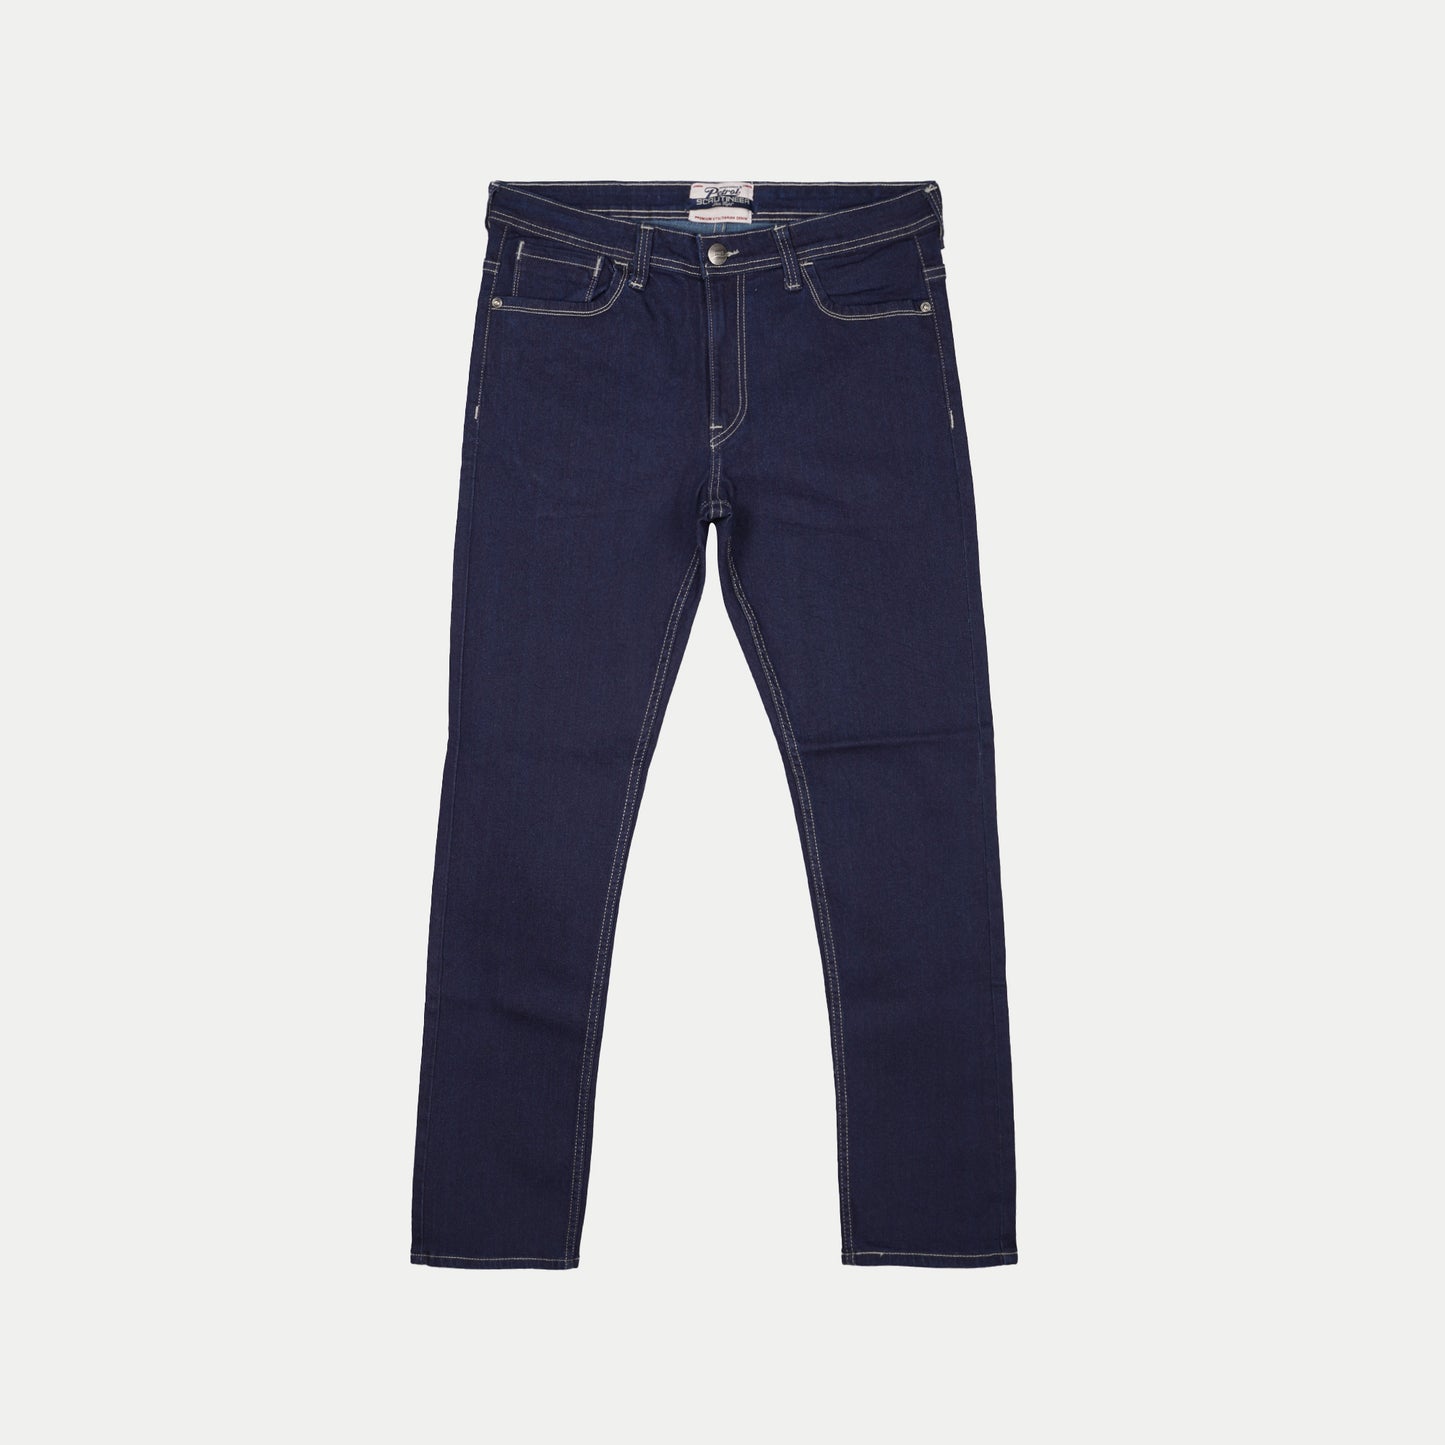 Petrol Basic Denim Pants for Men Skin Tight Fitting Mid Rise Trendy fashion Casual Bottoms Dark Shade Jeans for Men 150706 (Dark Shade)